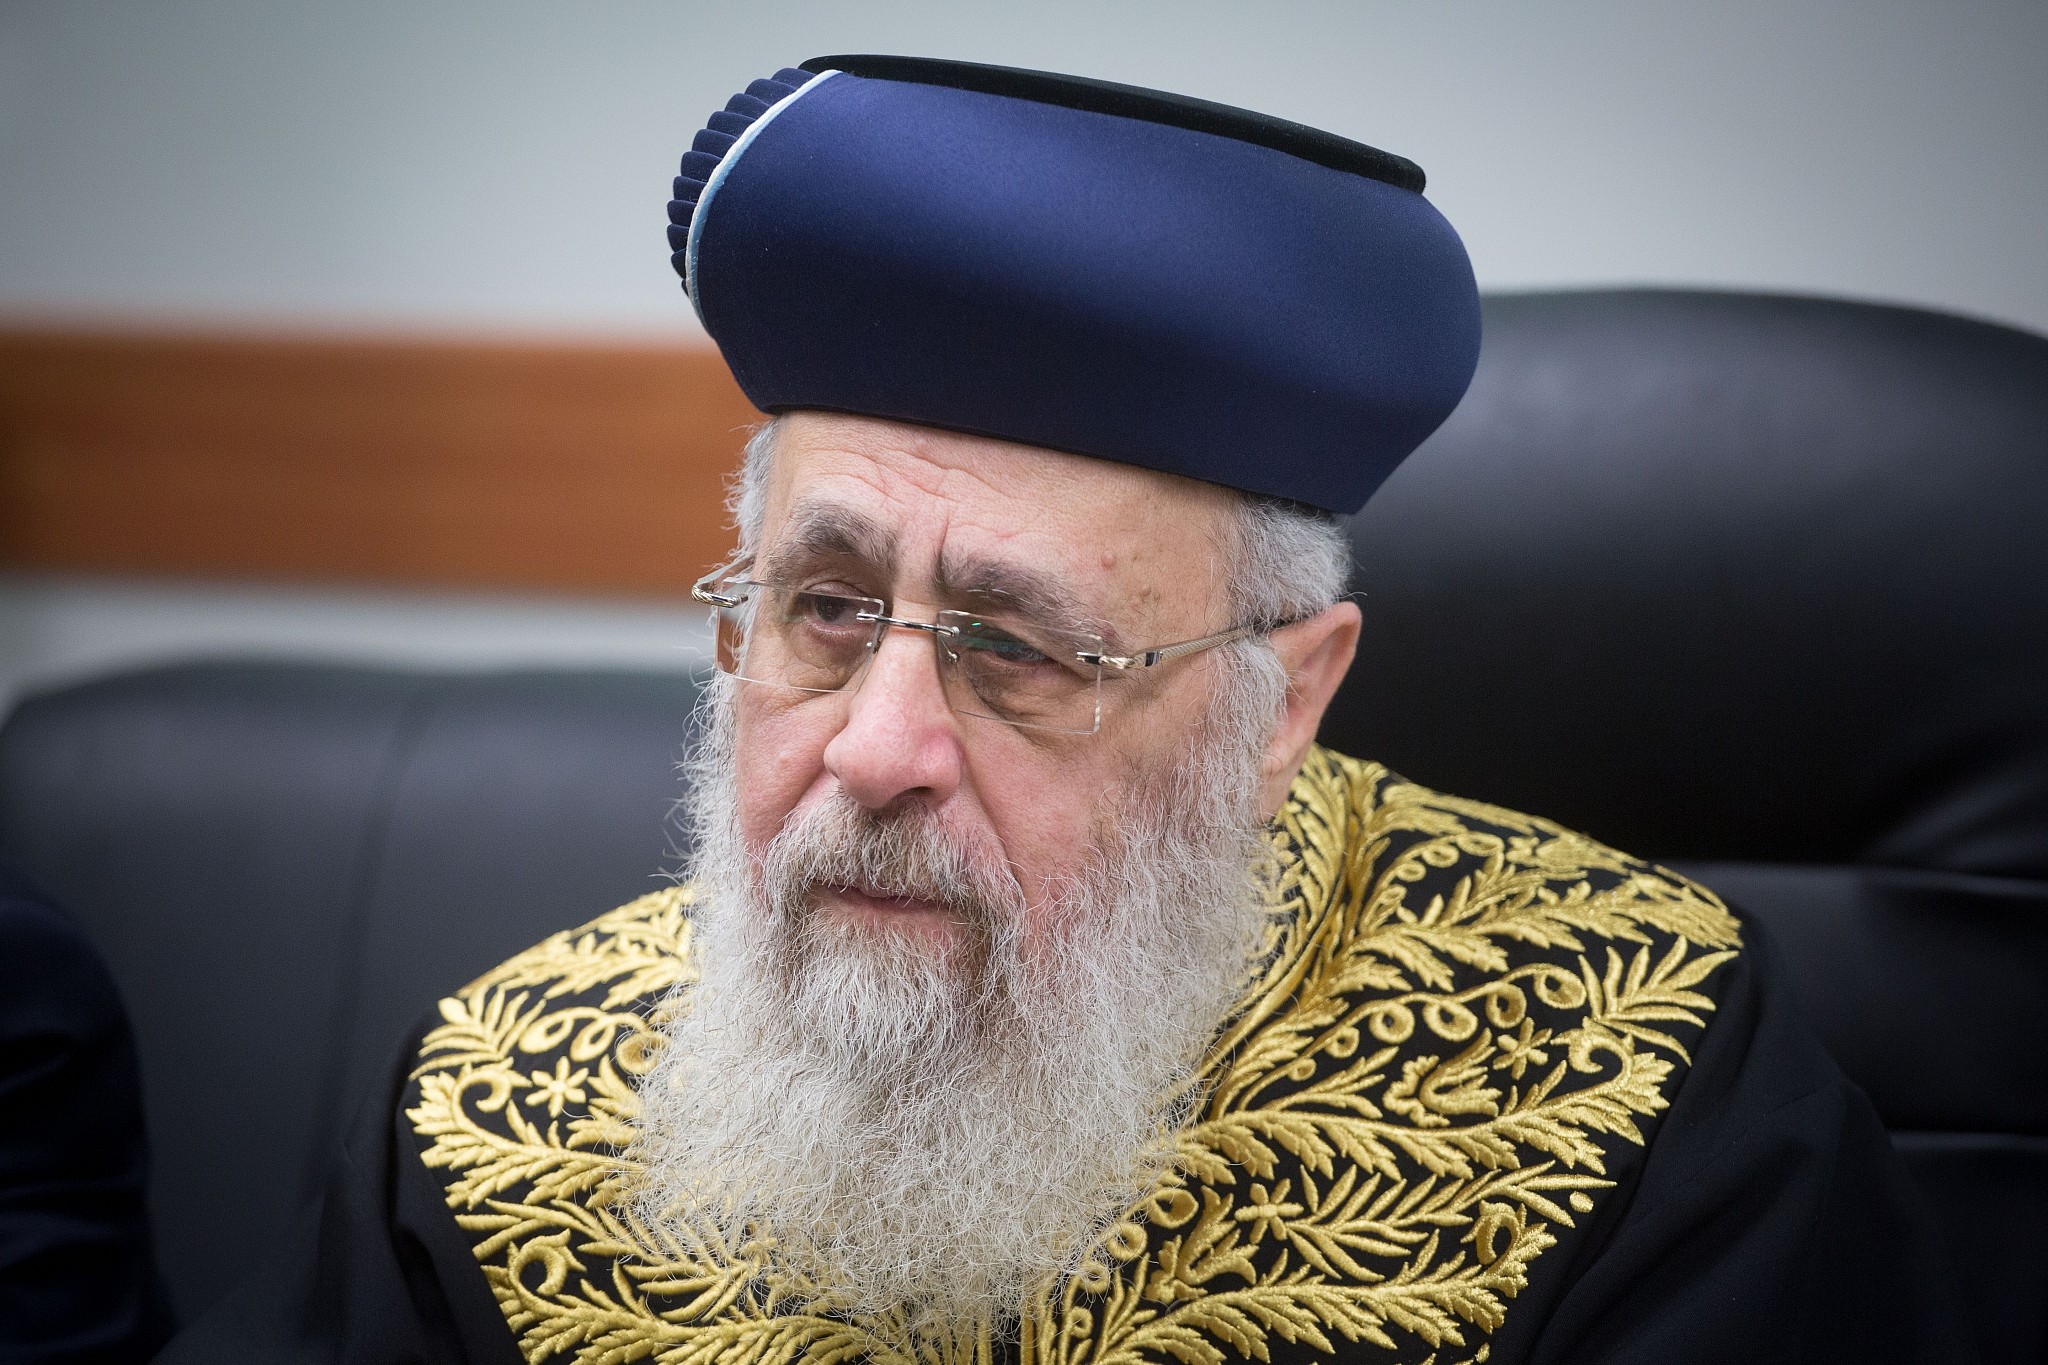 Rabbi Yitzhak Yosef says perpetrators are a minority 'desecrating God’...